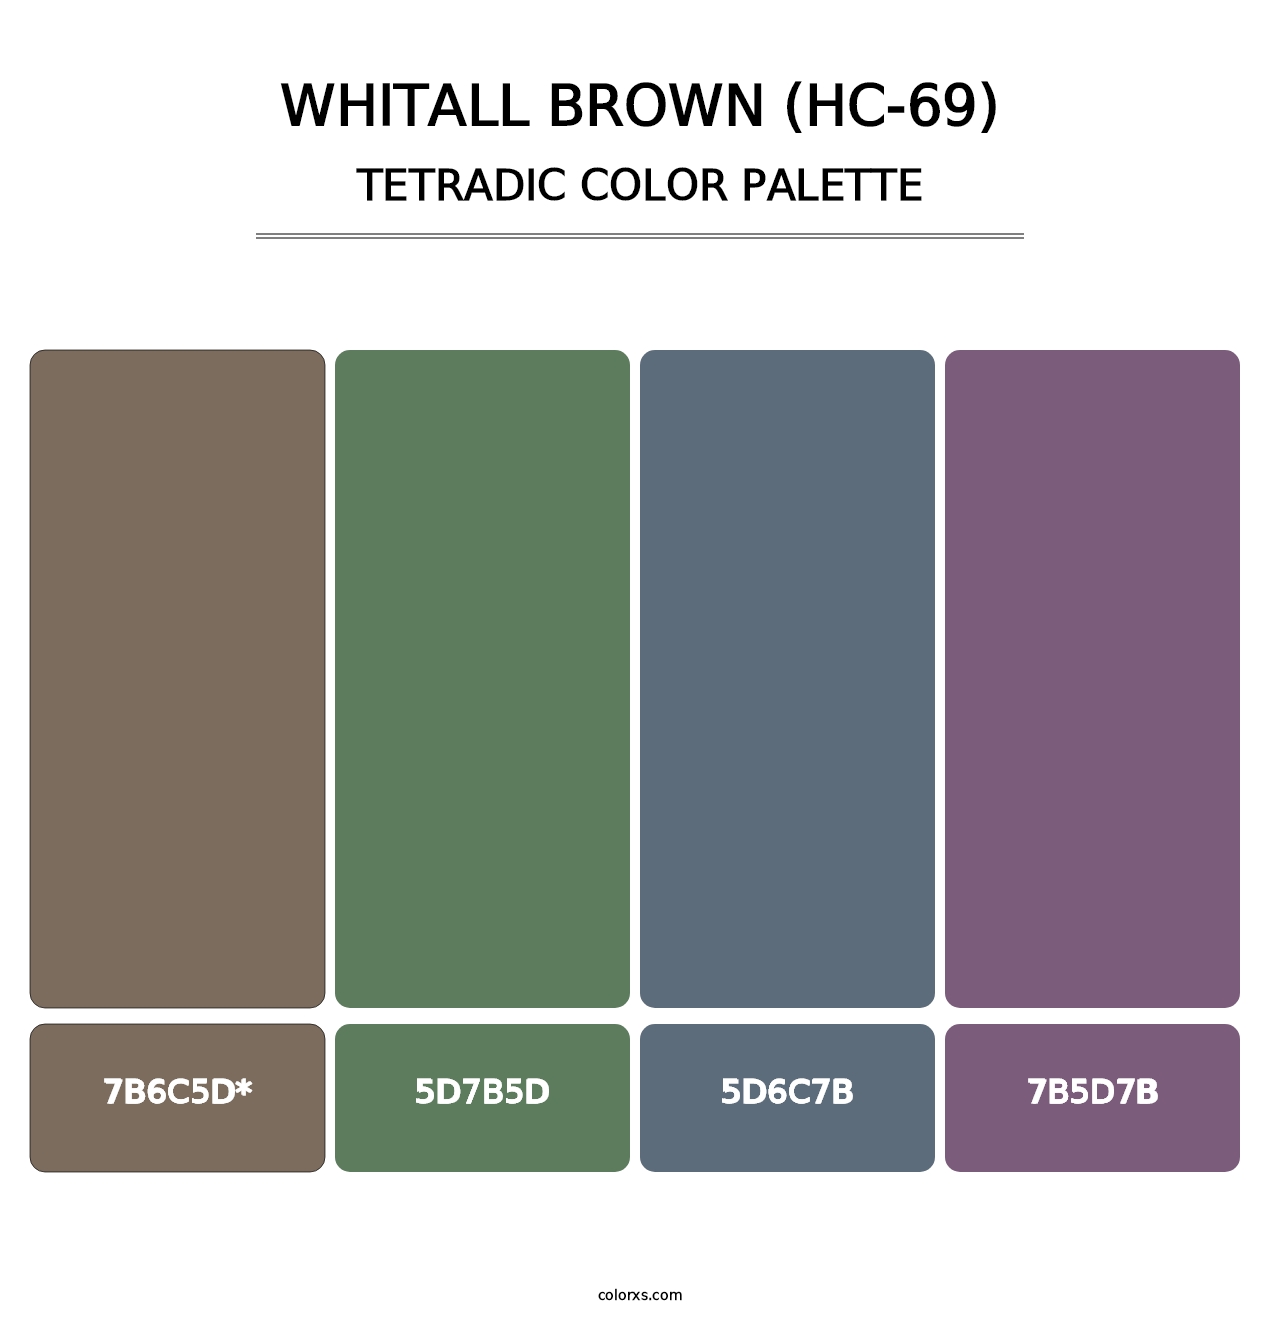 Whitall Brown (HC-69) - Tetradic Color Palette